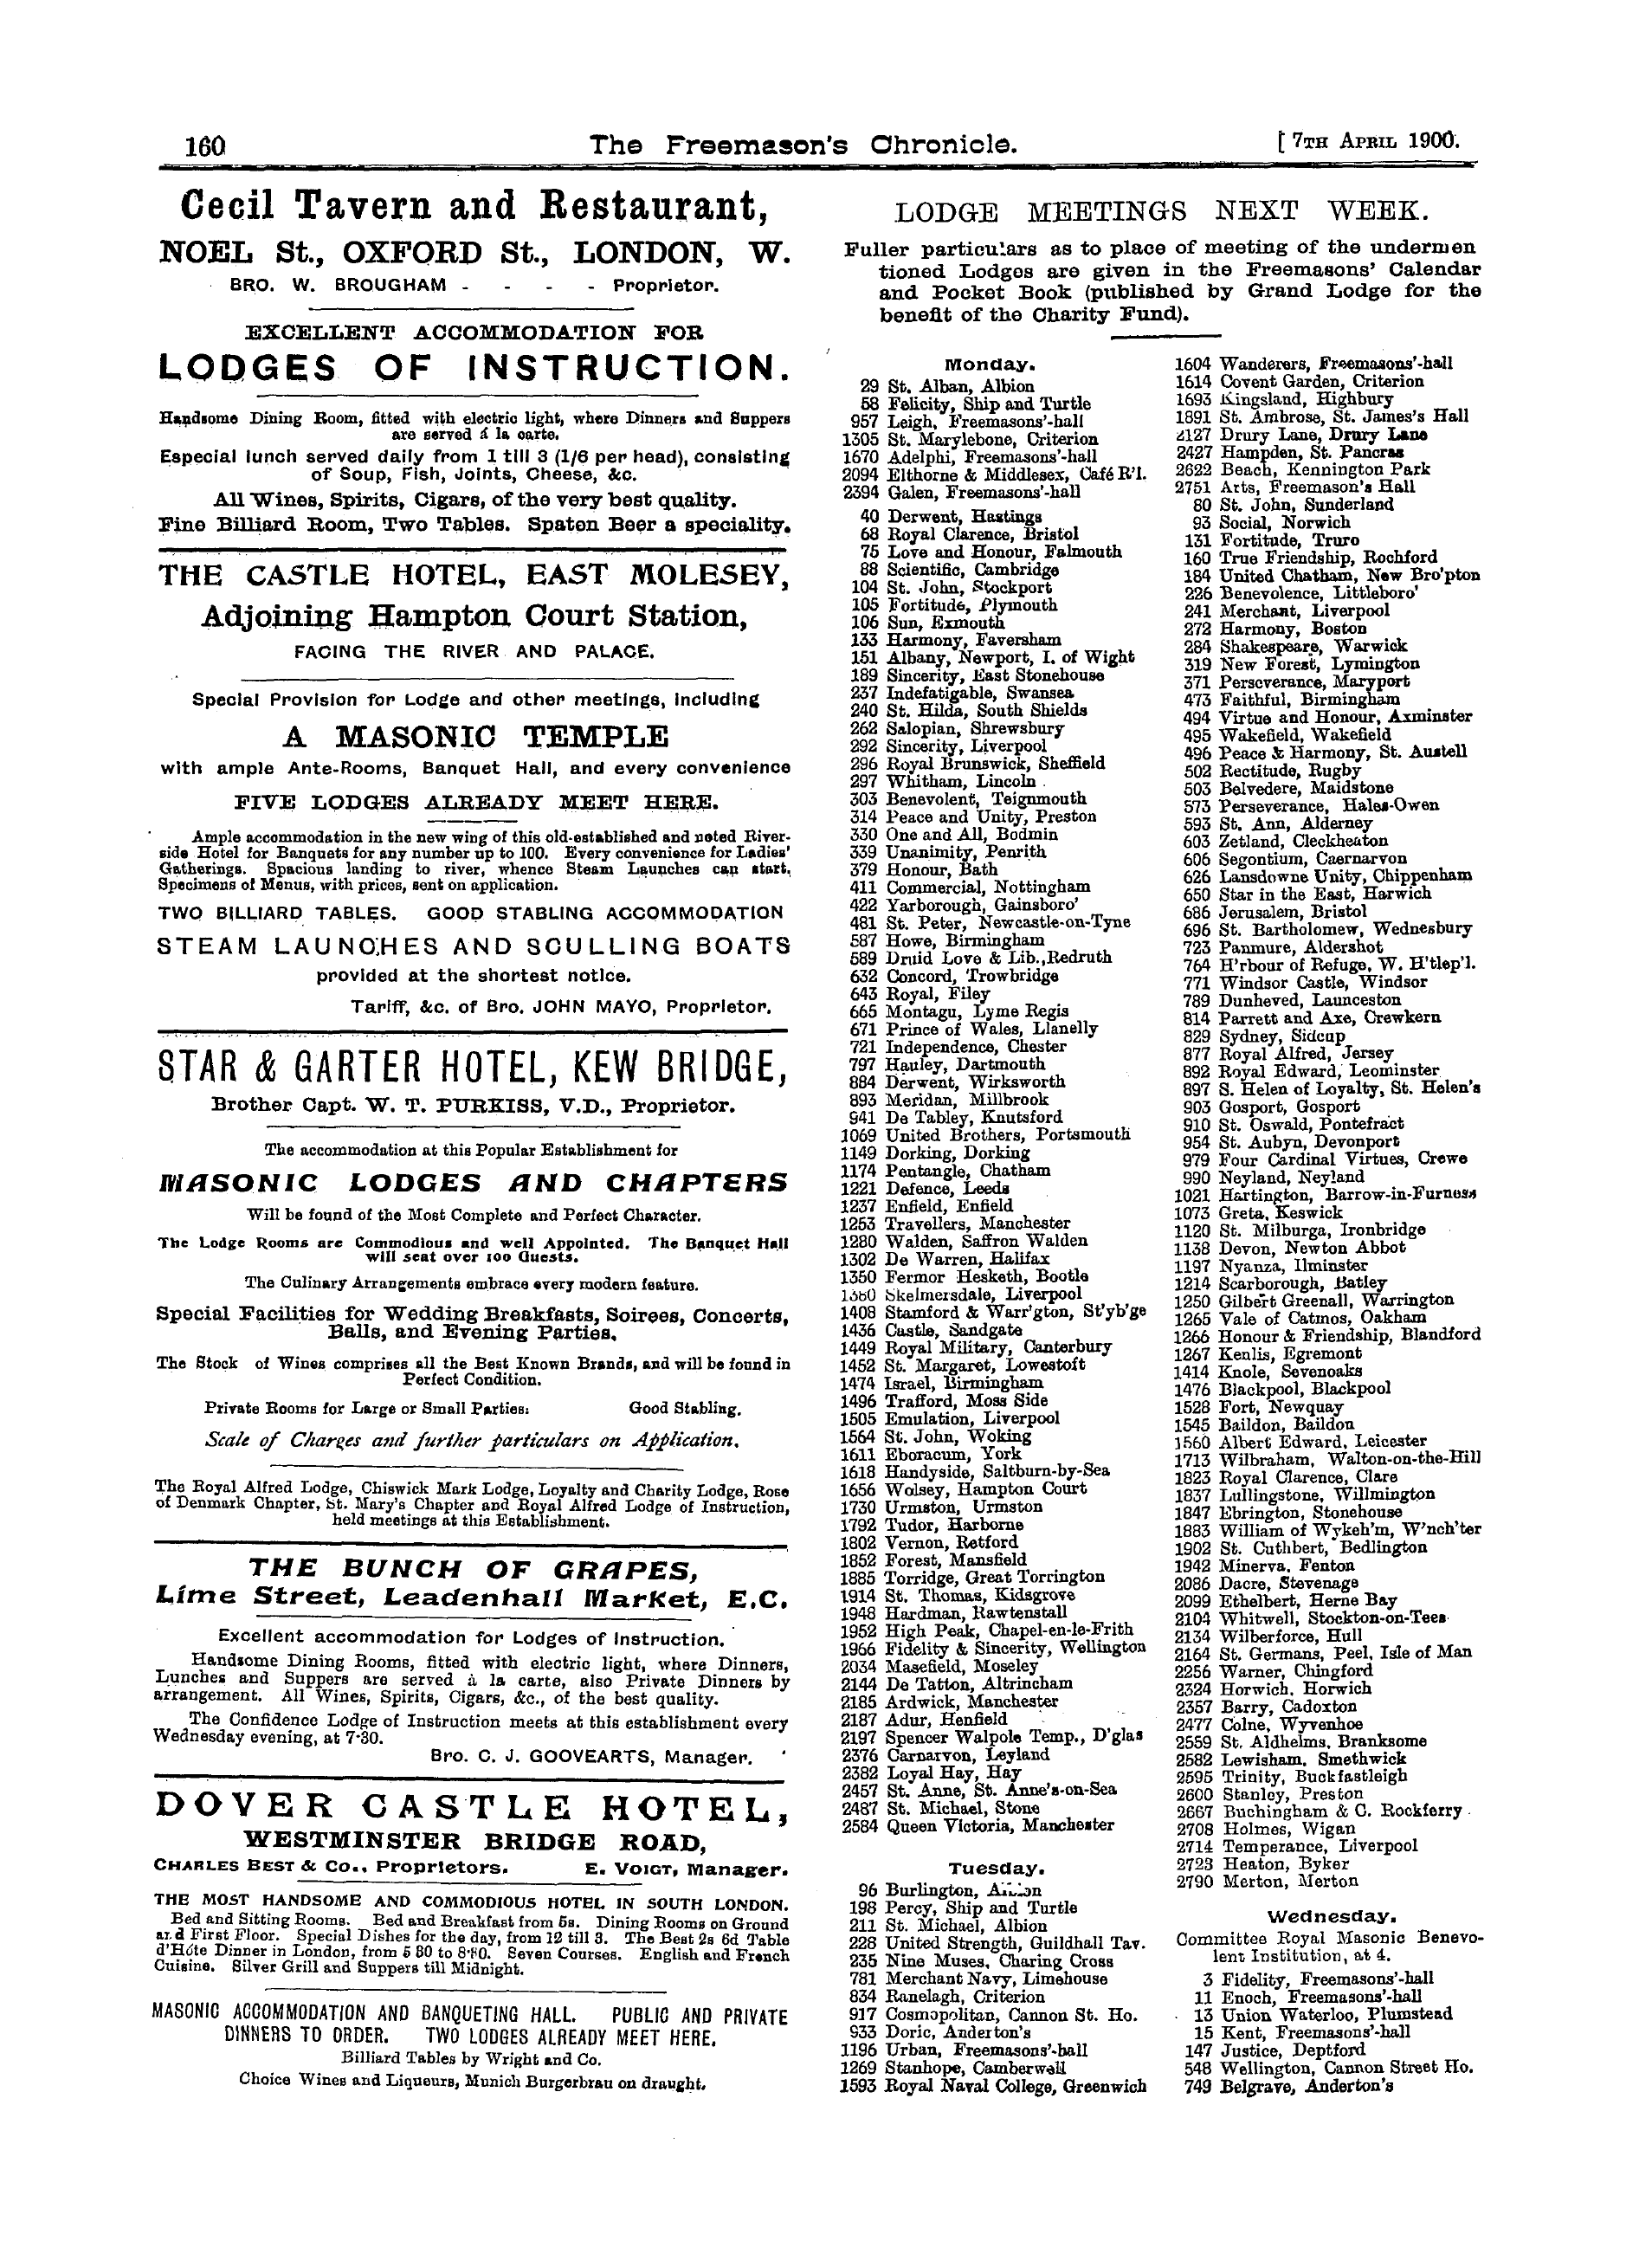 The Freemason's Chronicle: 1900-04-07 - Ad00403